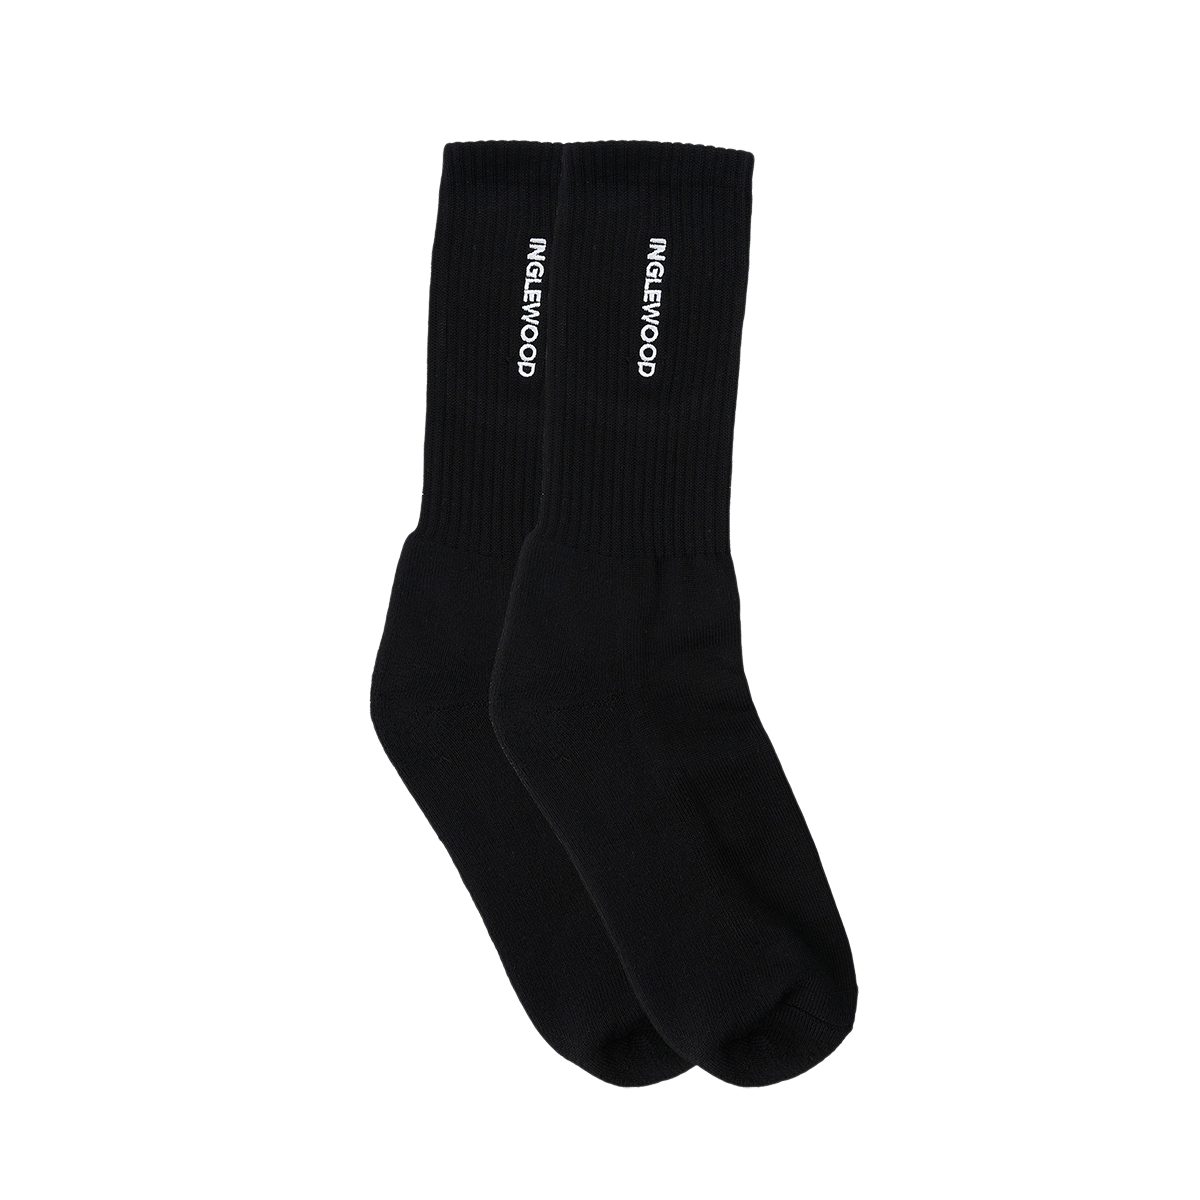 Inglewood Socks - 1 Pack (Black)